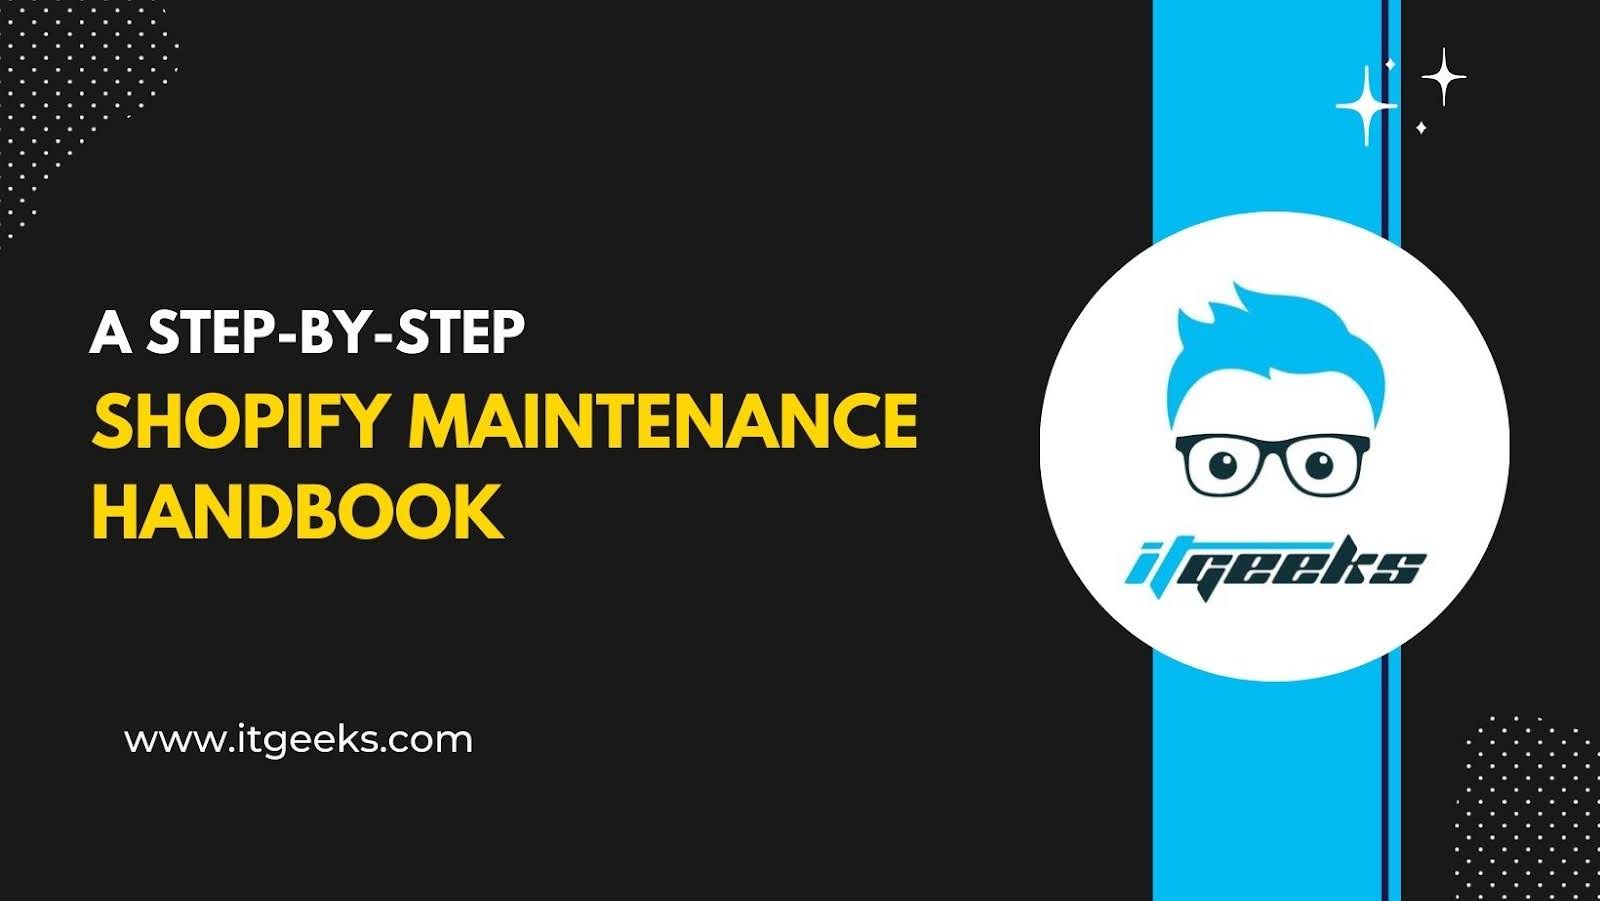 A Step-by-Step Shopify Maintenance Handbook